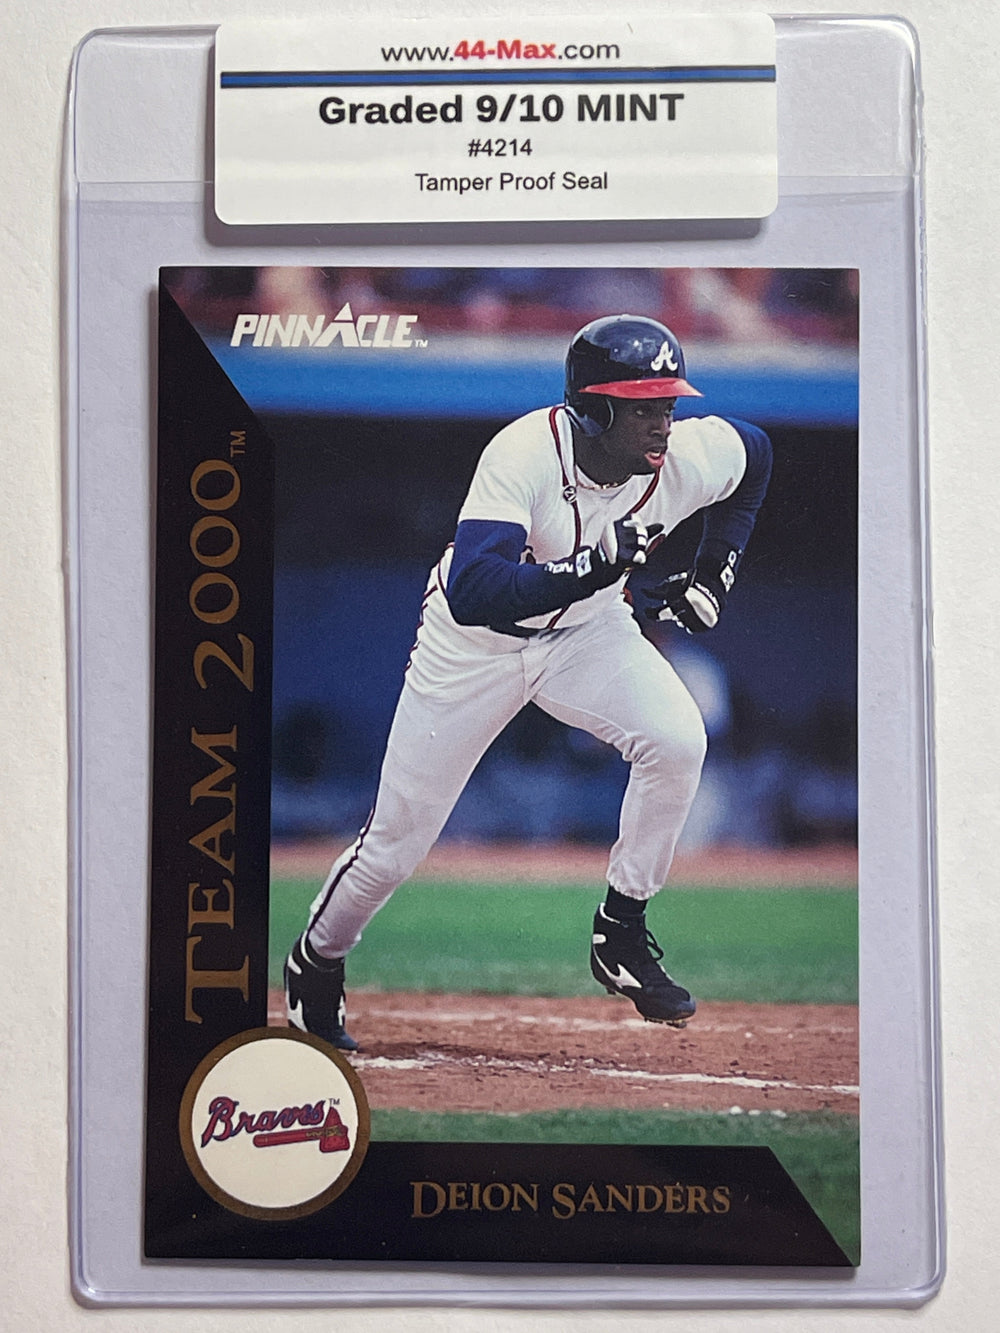 Deion Sanders Team 2000 1992 Pinnacle Baseball Card. 44-Max 9/10 Mint #4214